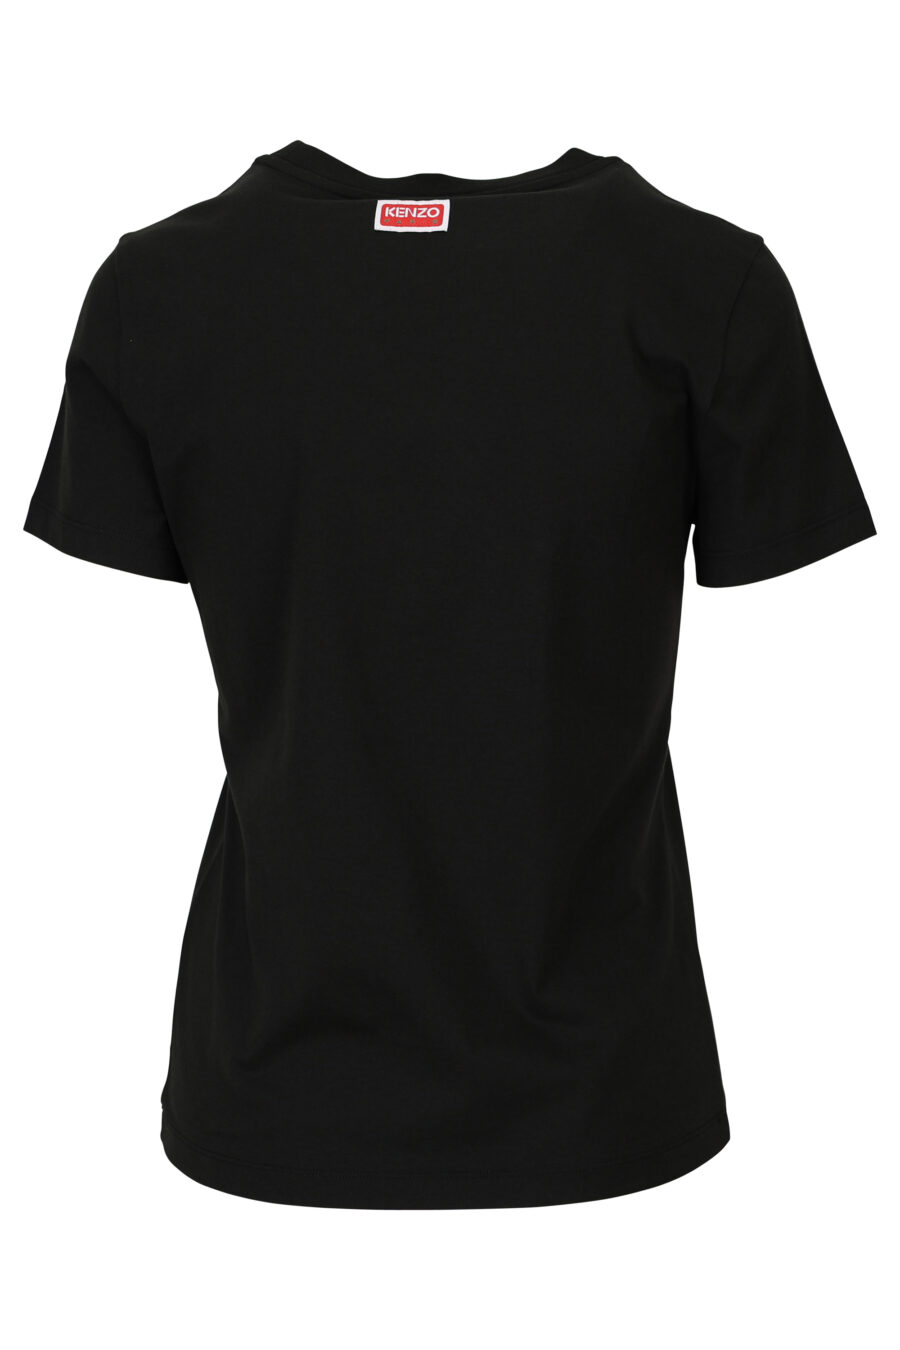 Camiseta negra con logo "tiger" bordado - 3612230552487 1